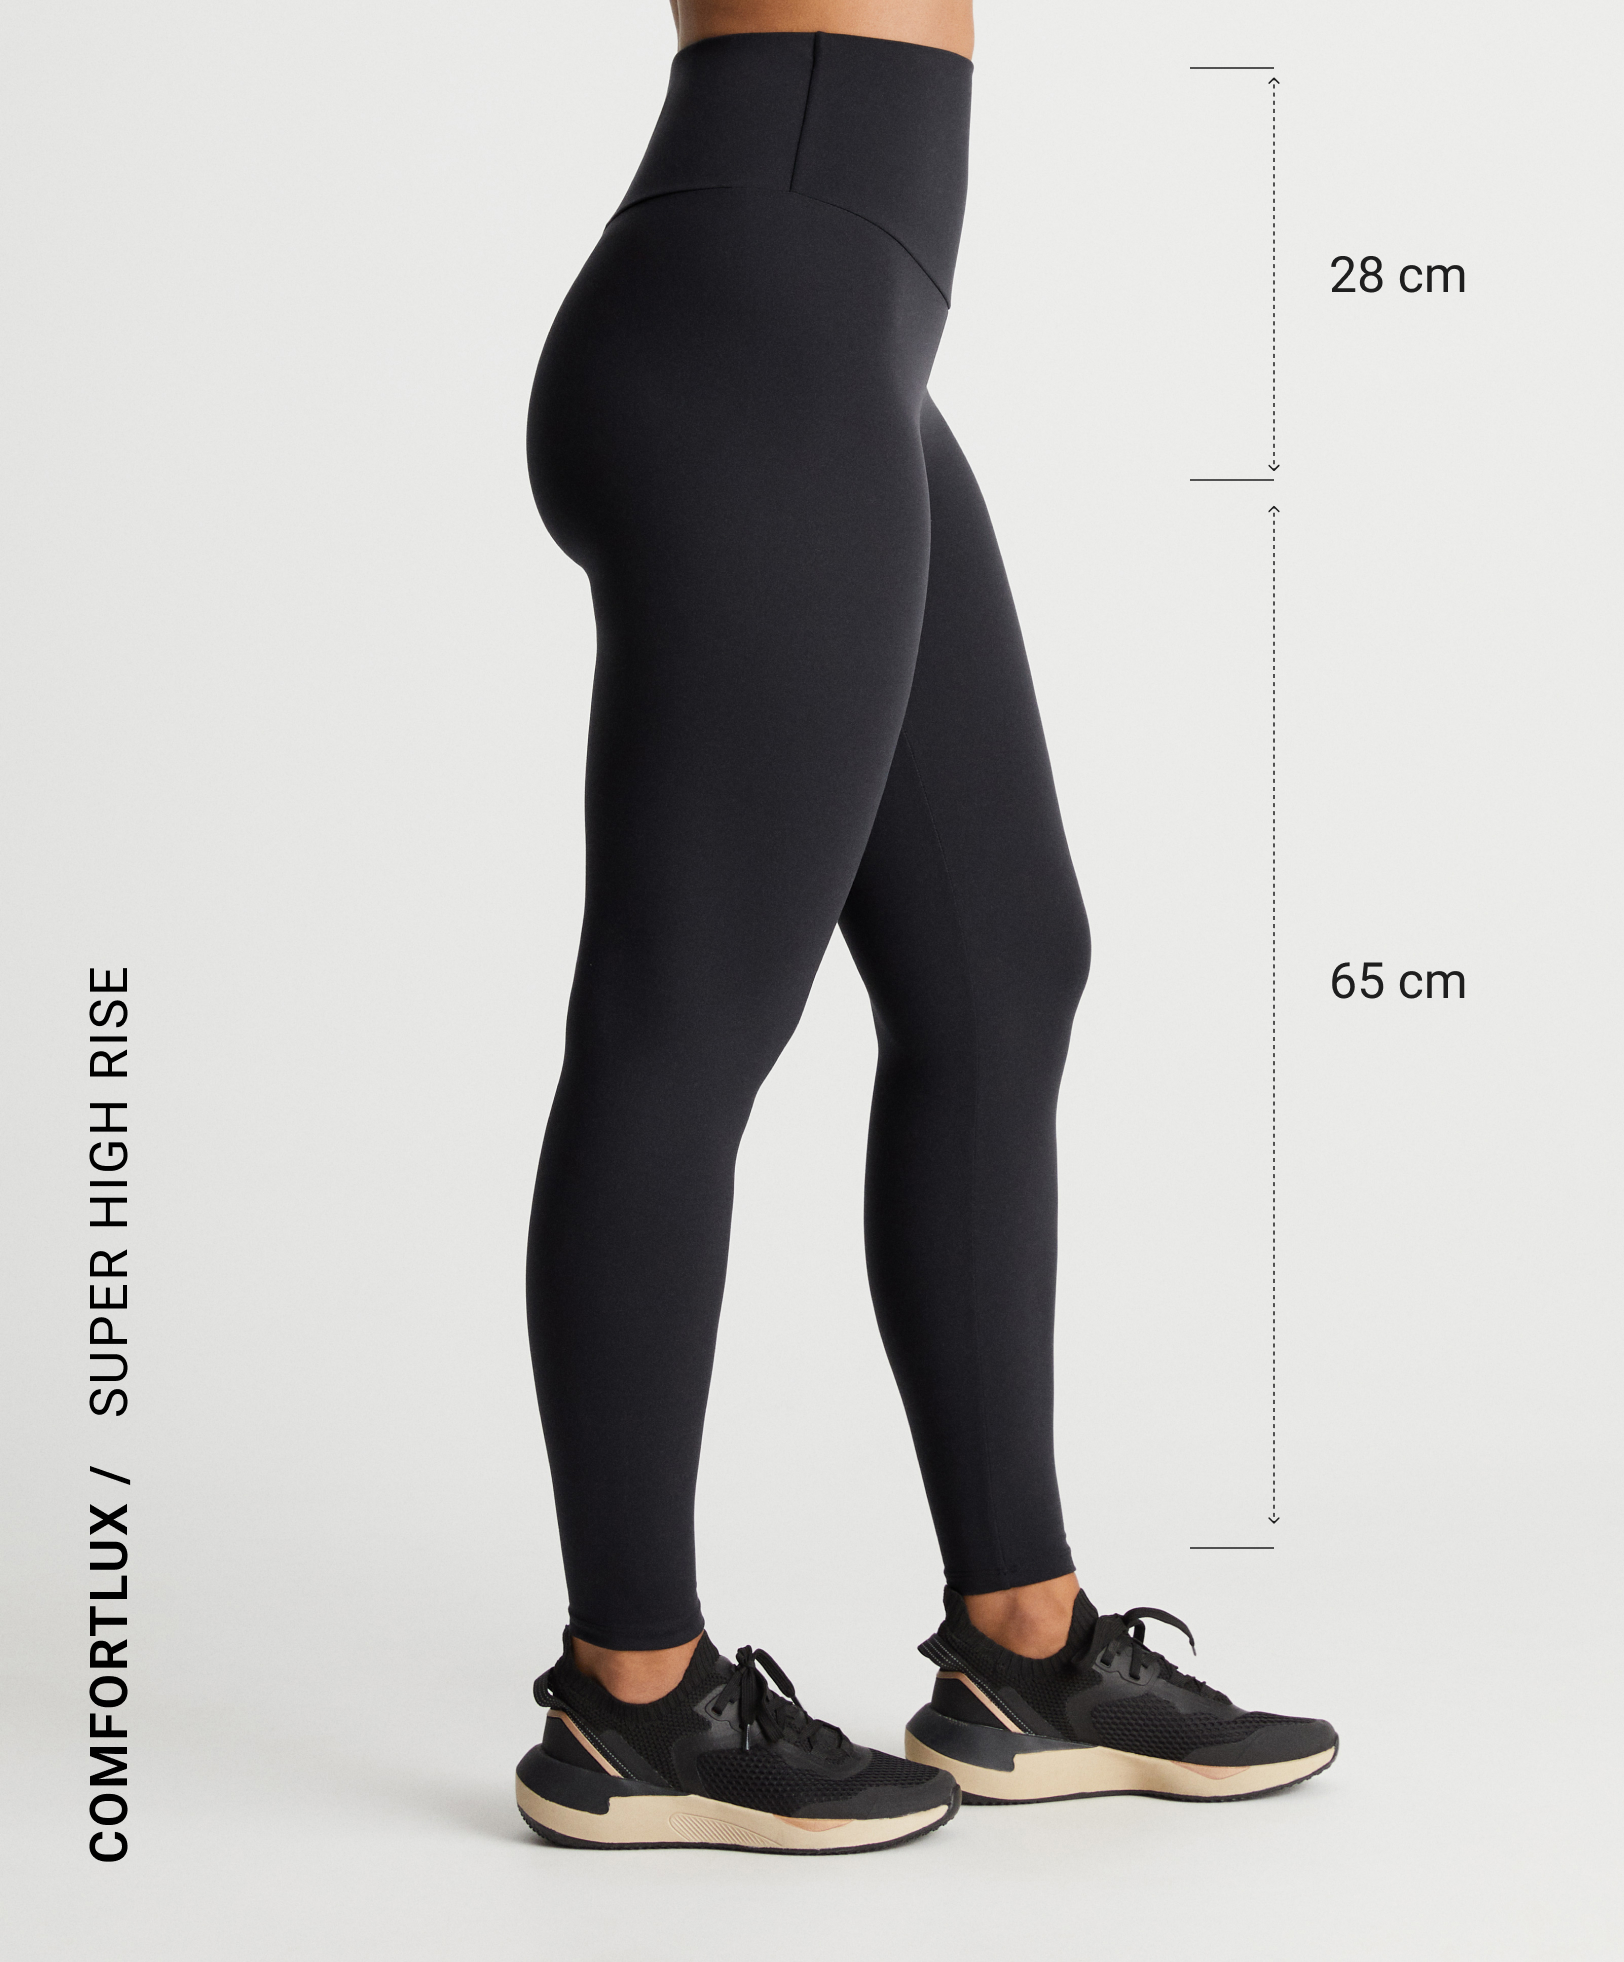 Comfortlux super-high-rise 65cm ankle-length leggings